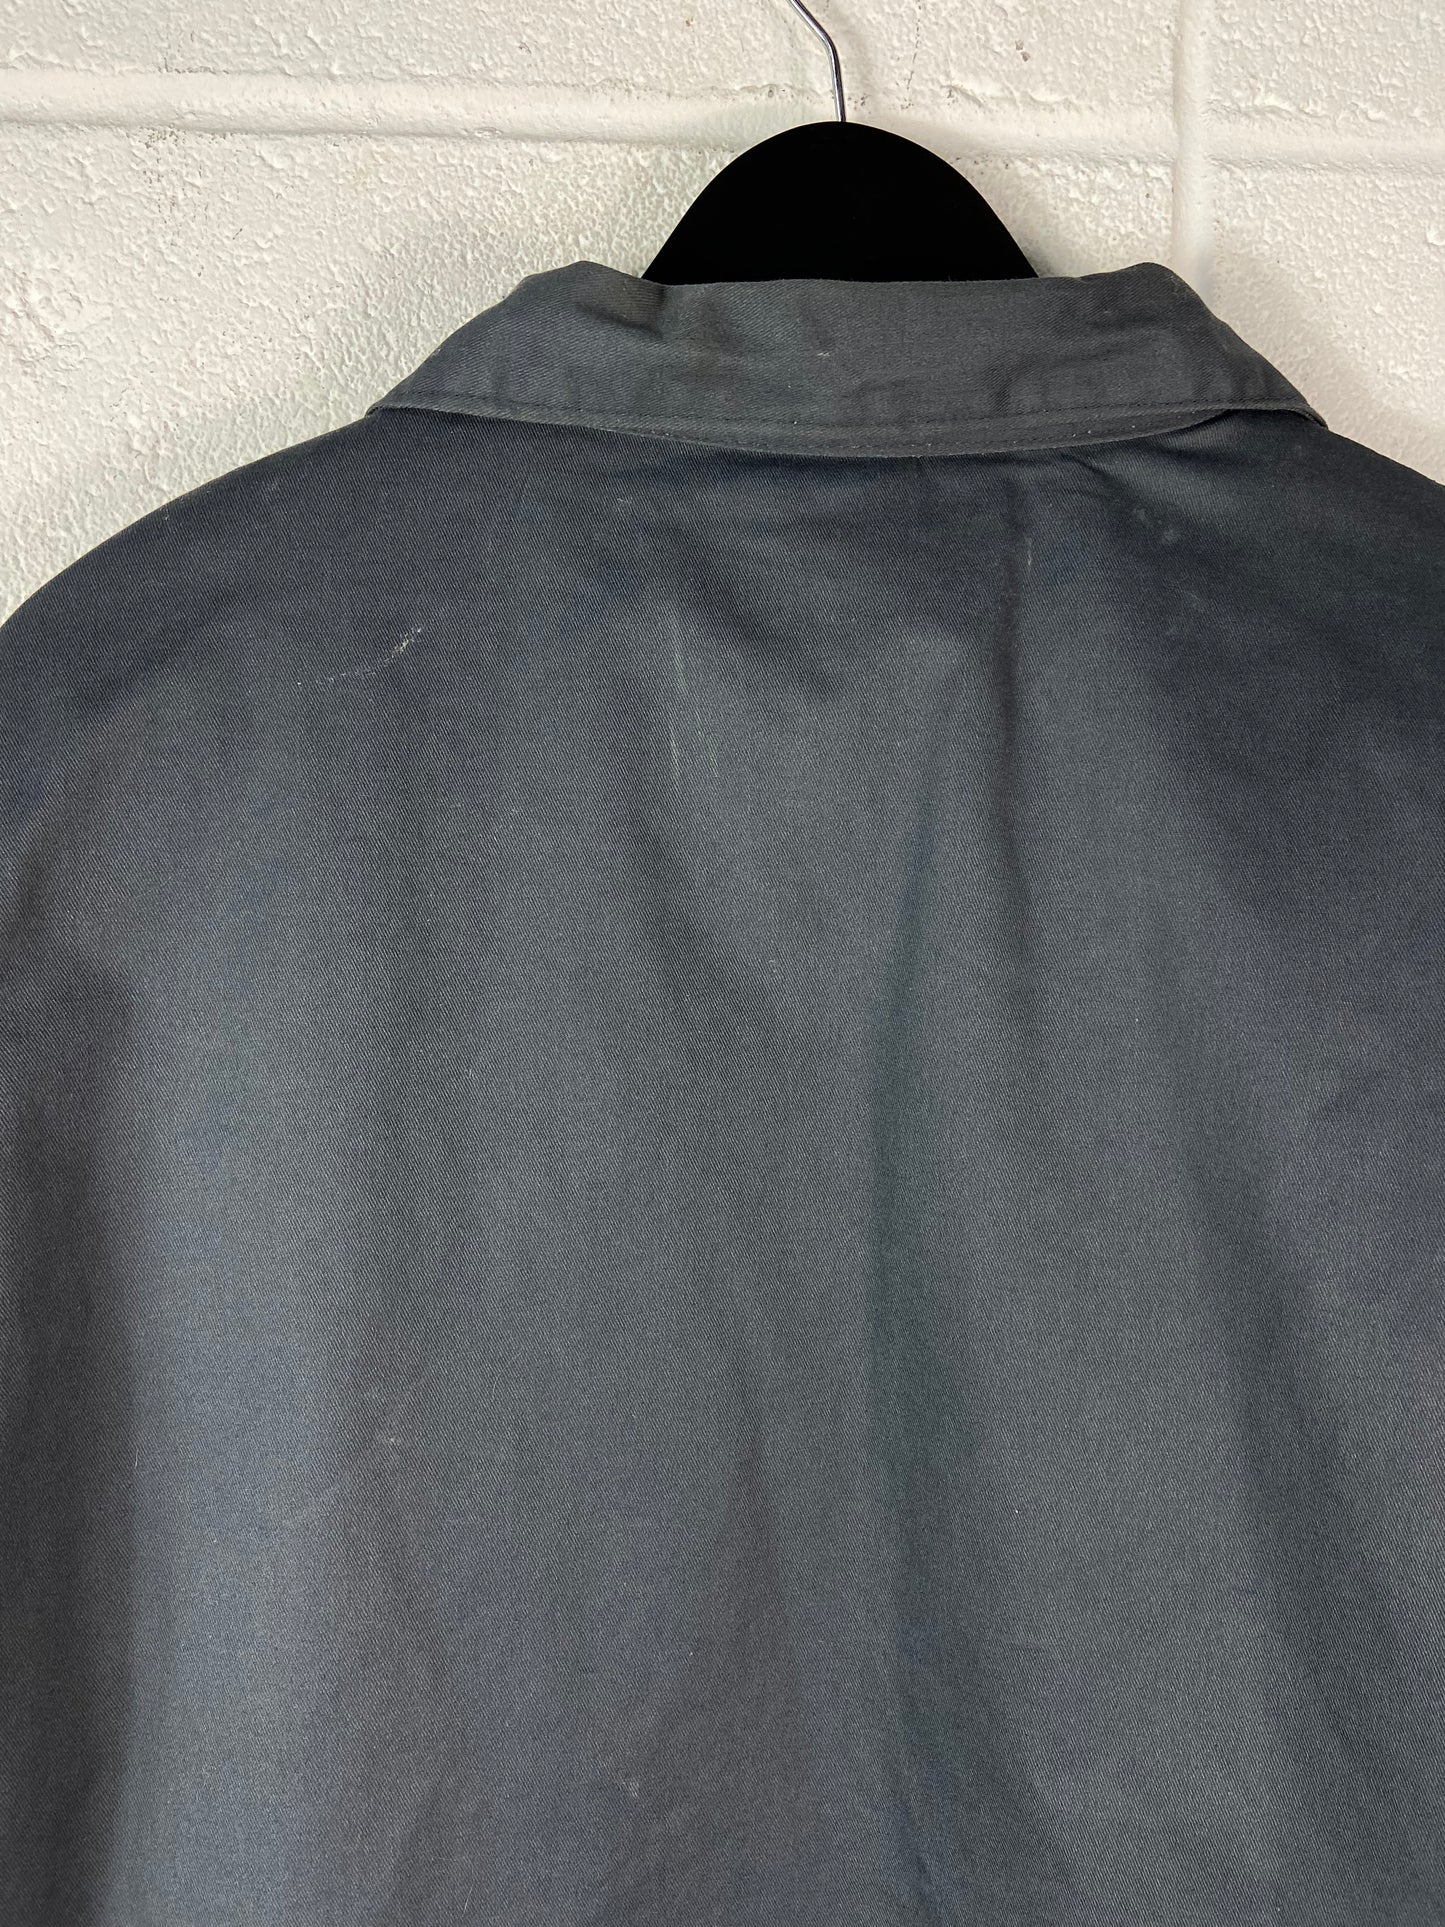 VTG Grey Quilted Work Jacket Sz XL